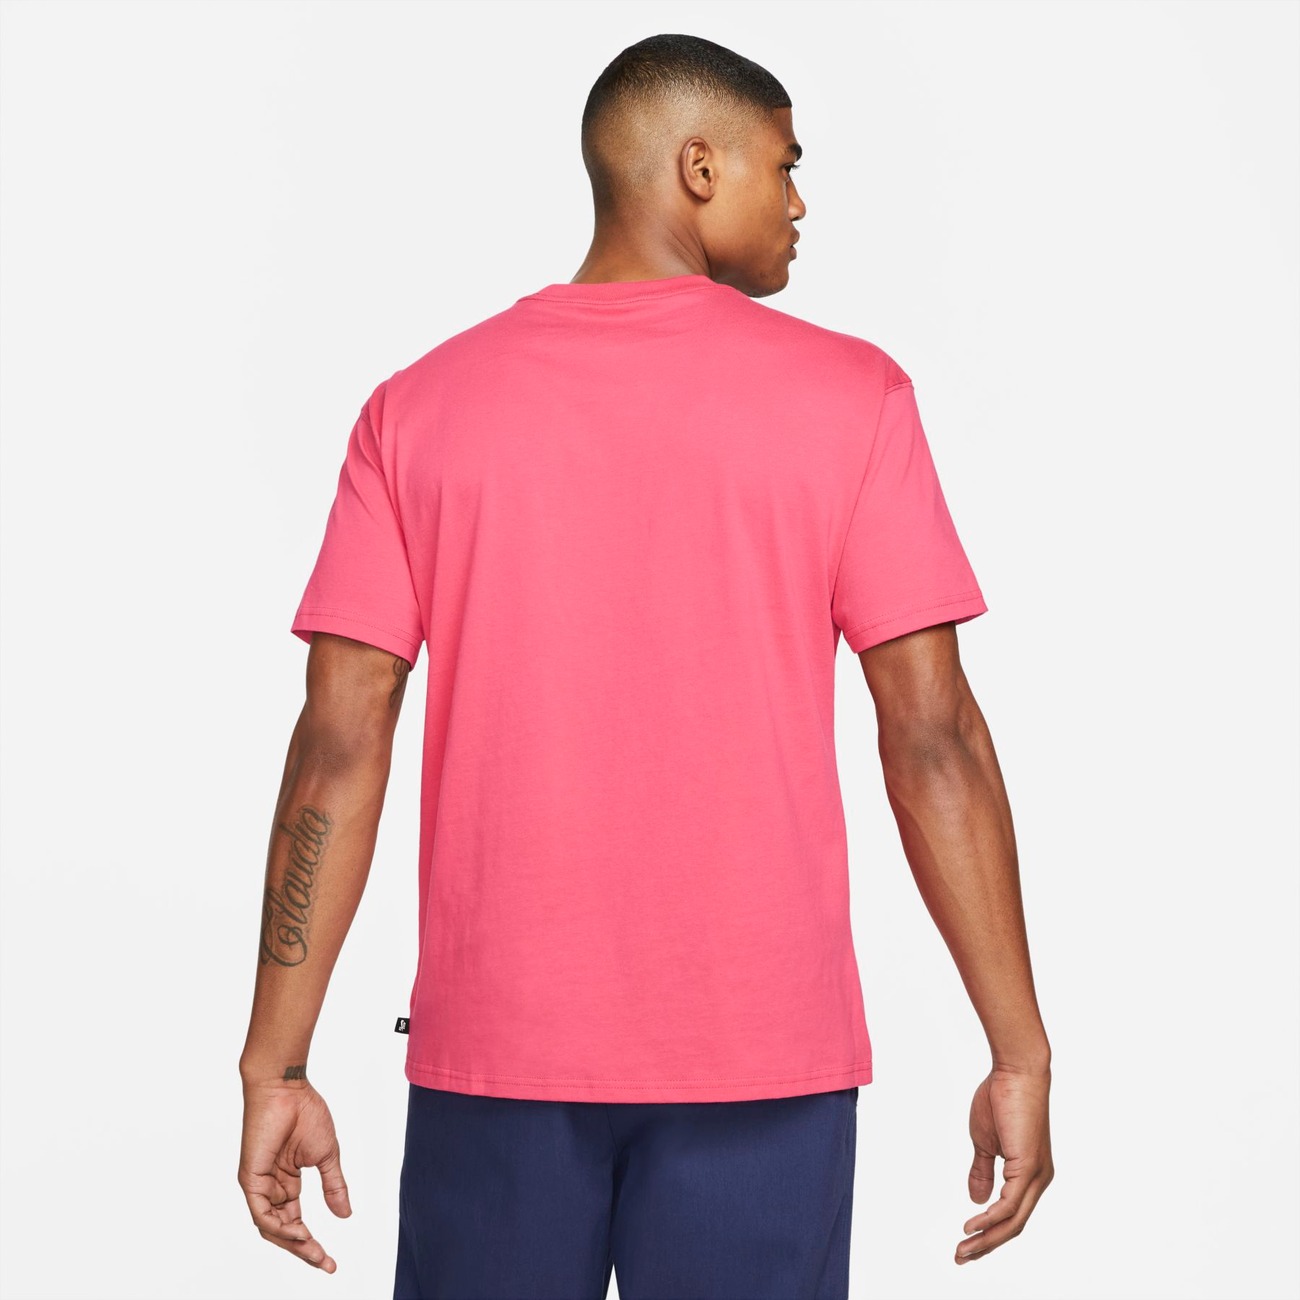 Camiseta Nike SB Masculina - Foto 2